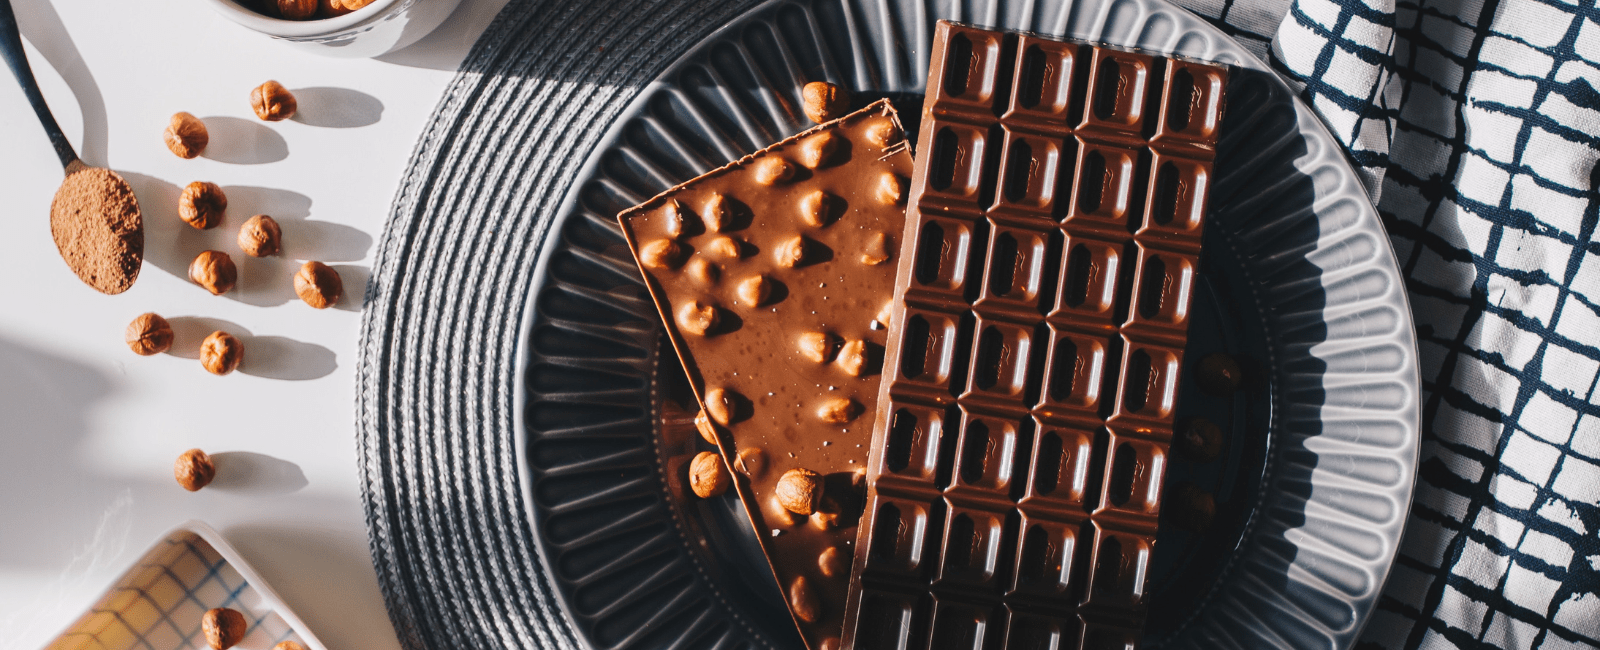 Chocolate blocks on a plate